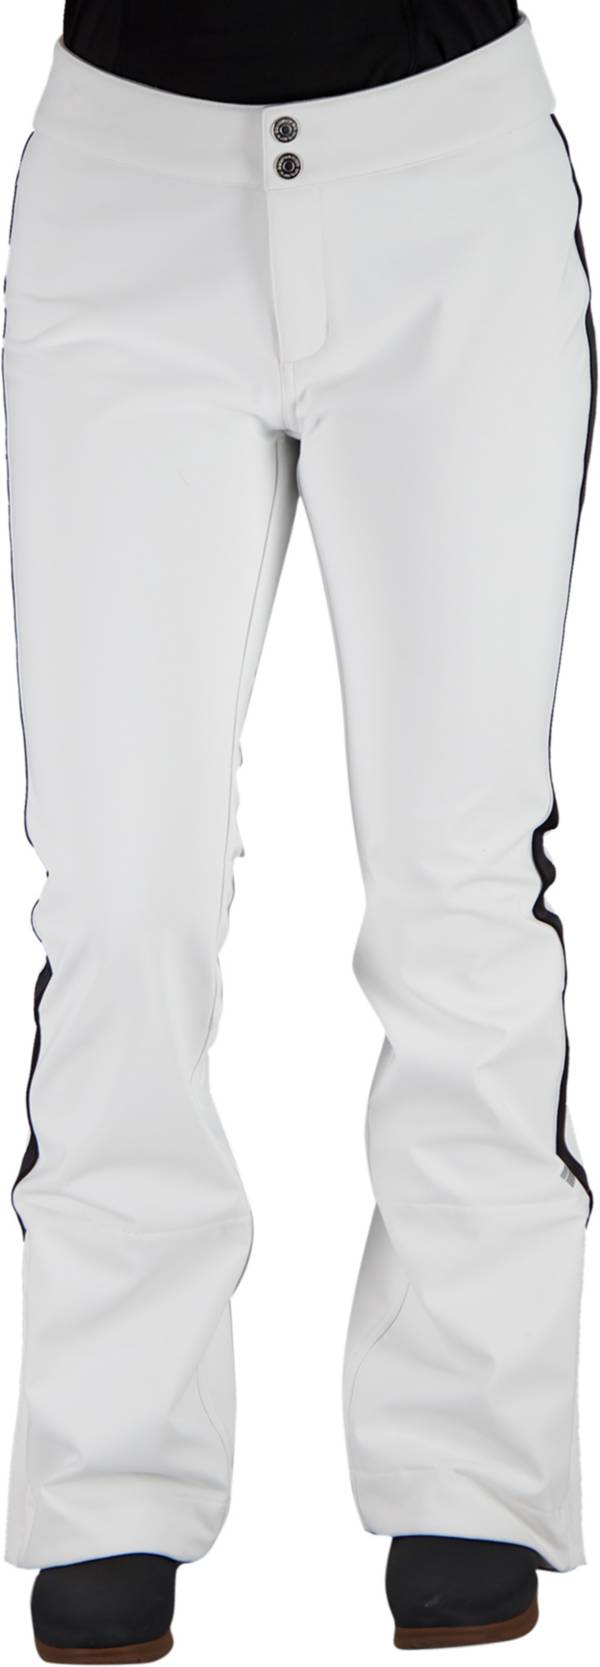 Obermeyer Women's The Bond Sport Pants product image